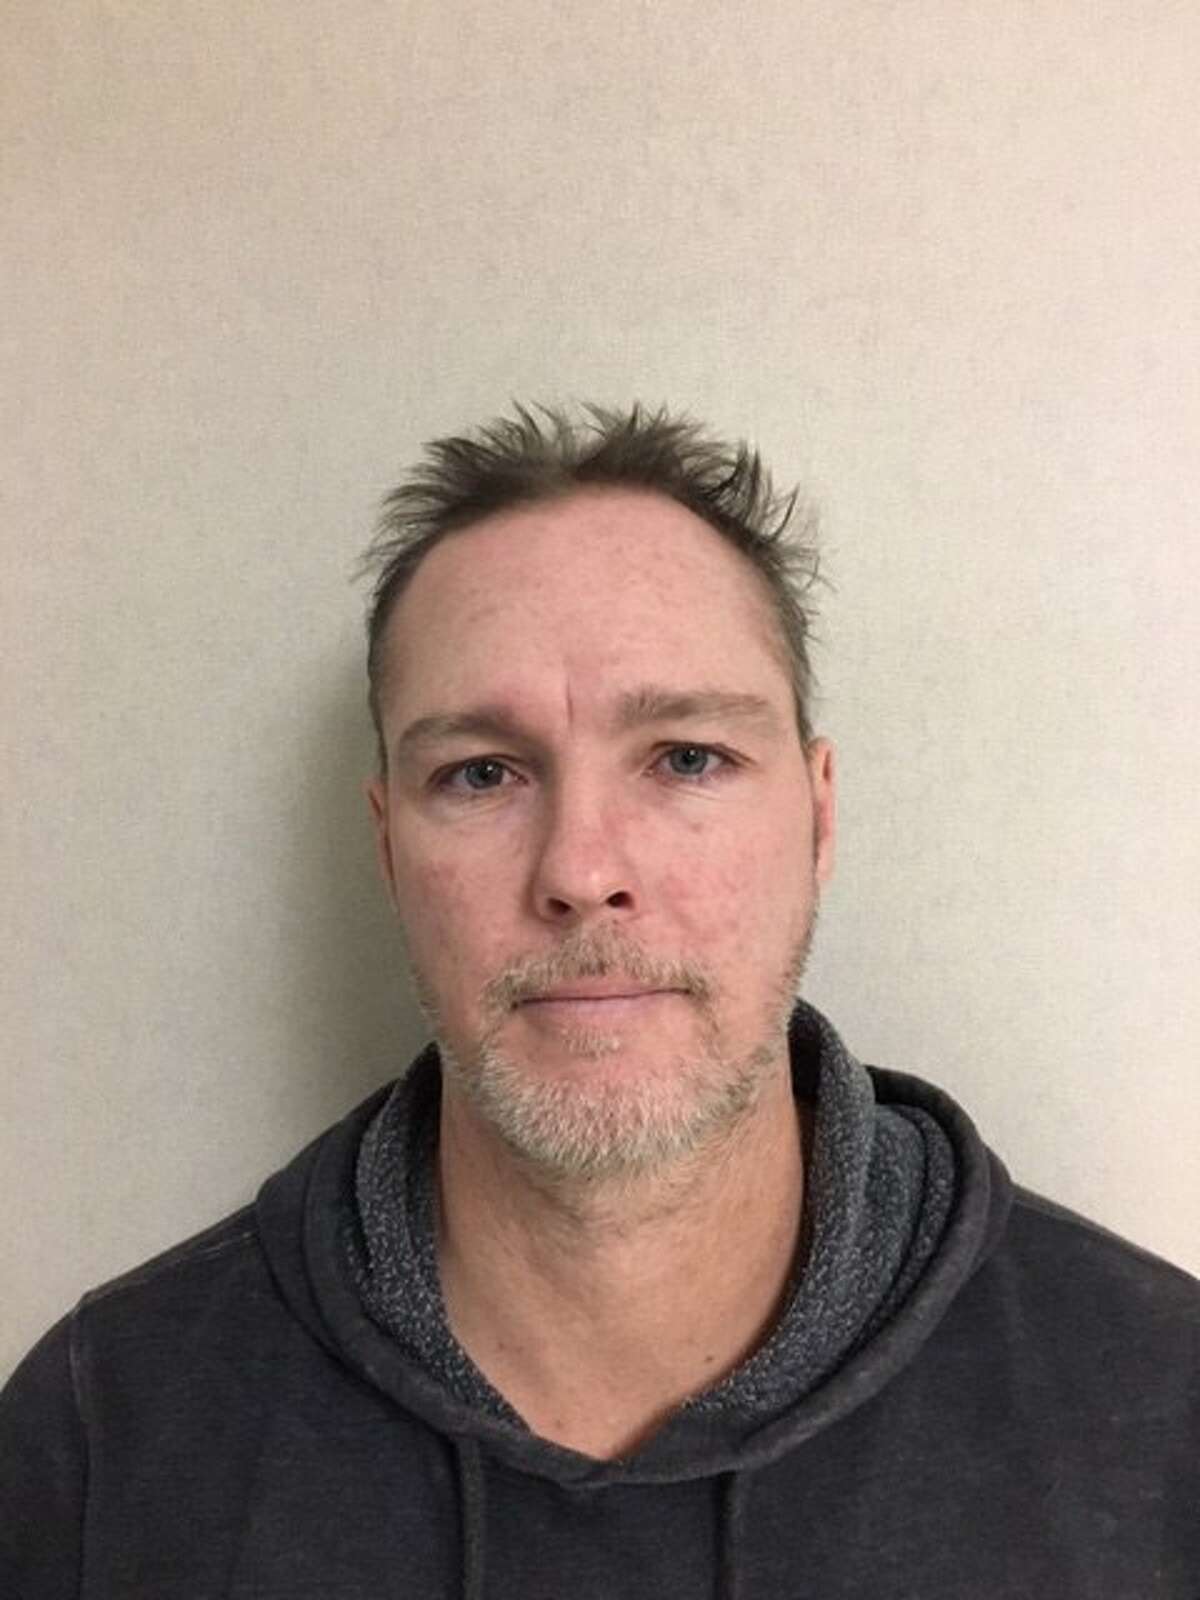 Feb 2019 18 Arrested For Felony Sex Crimes In Galveston